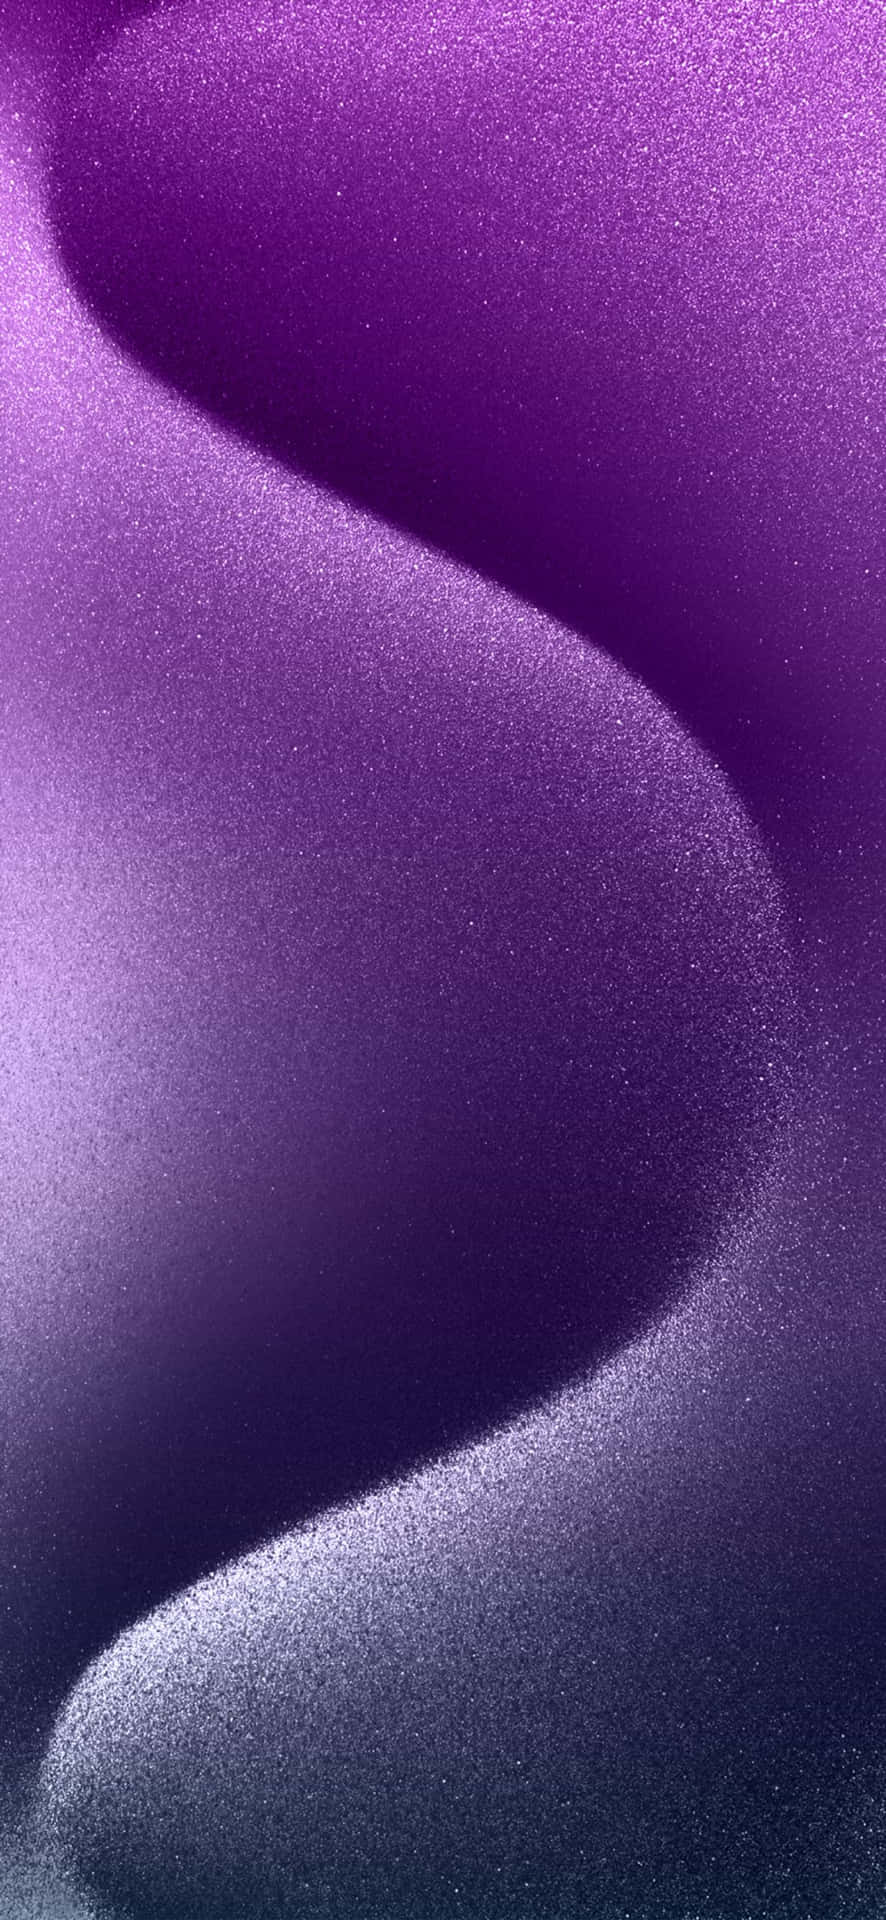 Abstract Purple Swirl Texture Wallpaper